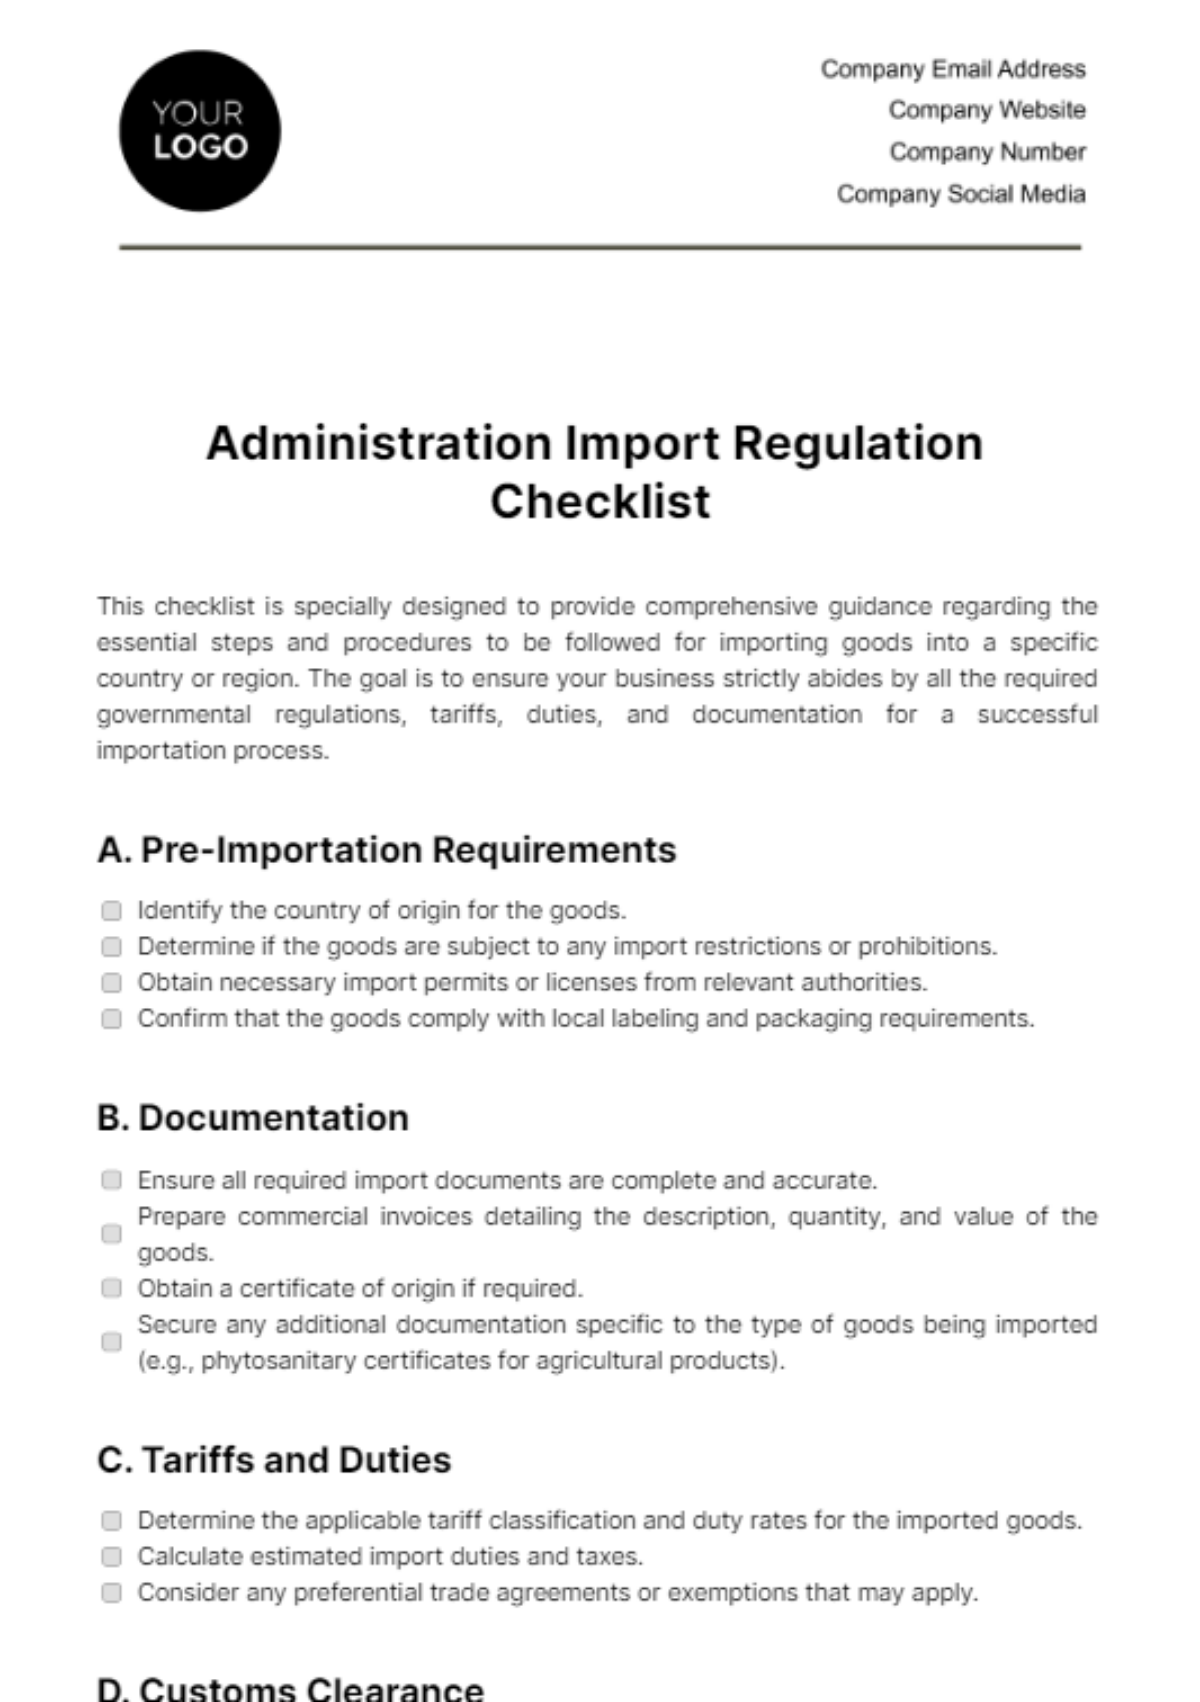 Free Administration Import Regulation Checklist Template